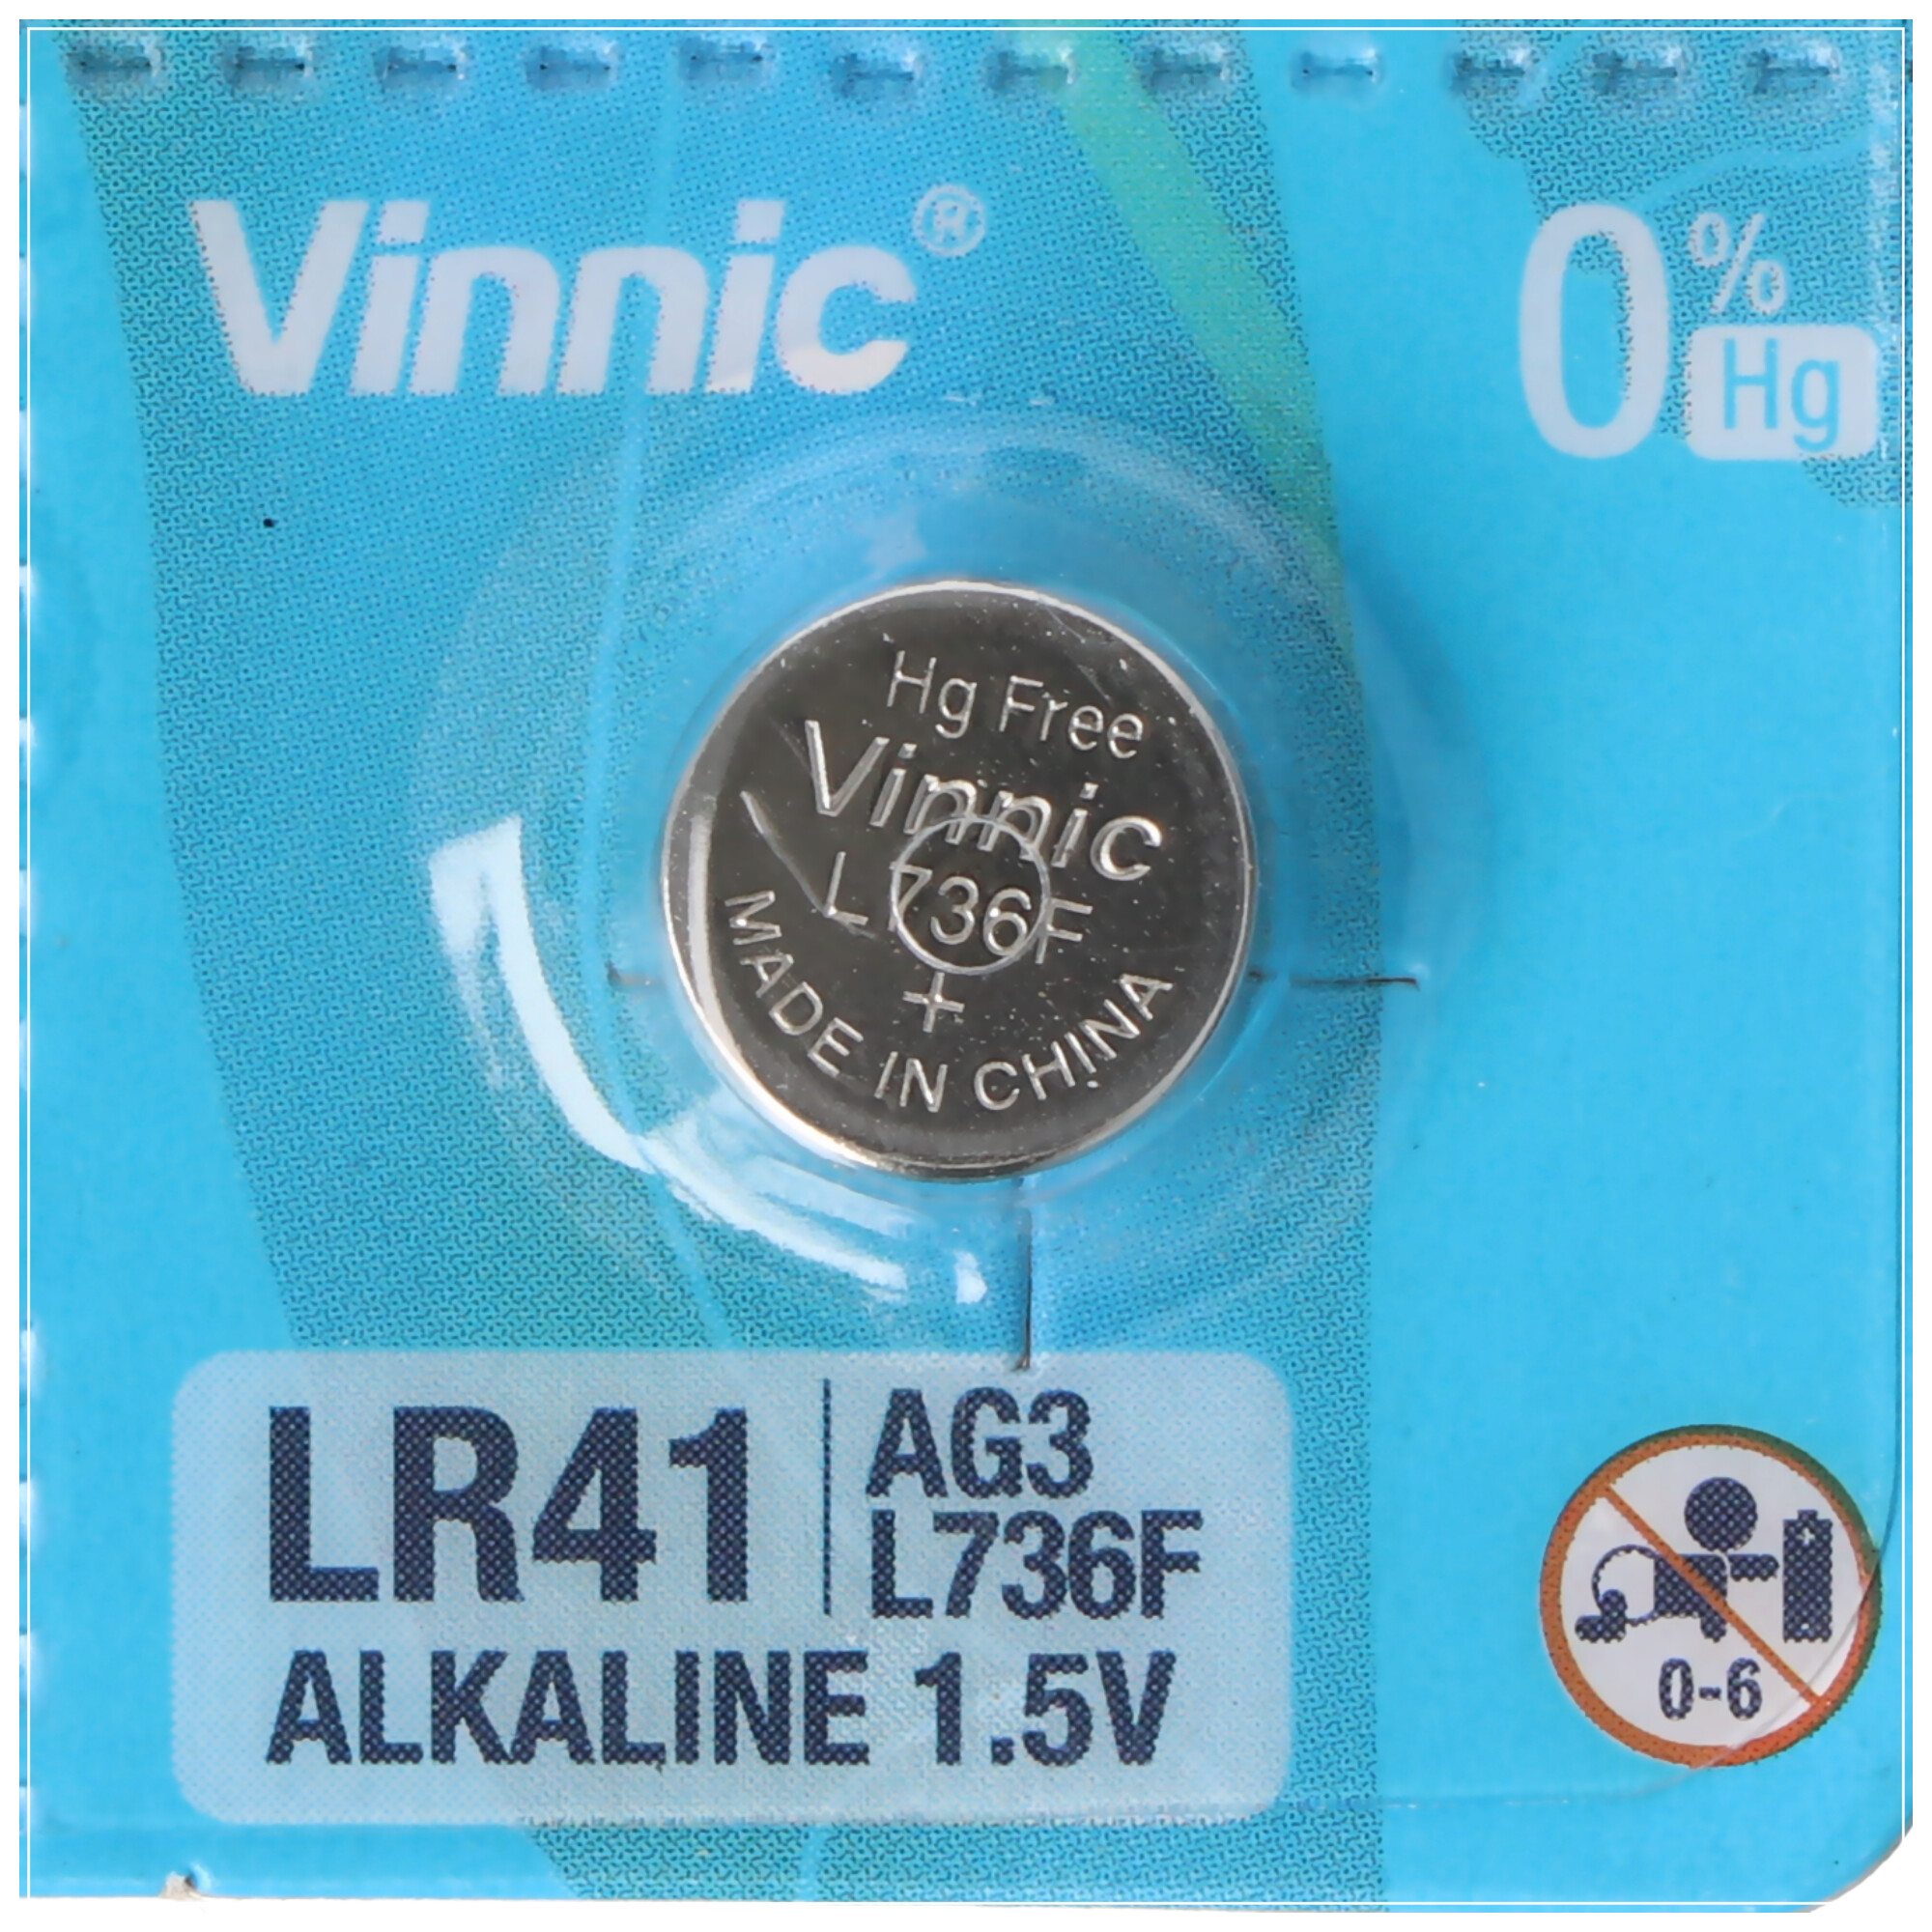 ABSINA 10x Pile LR41 AG3-1,5V Alcaline étanche avec Longue durée - LR736 /  L736 / G3 / G3A / 3GA / 192 / GP192 / V3GA / RW87 - Piles LR41, LR41